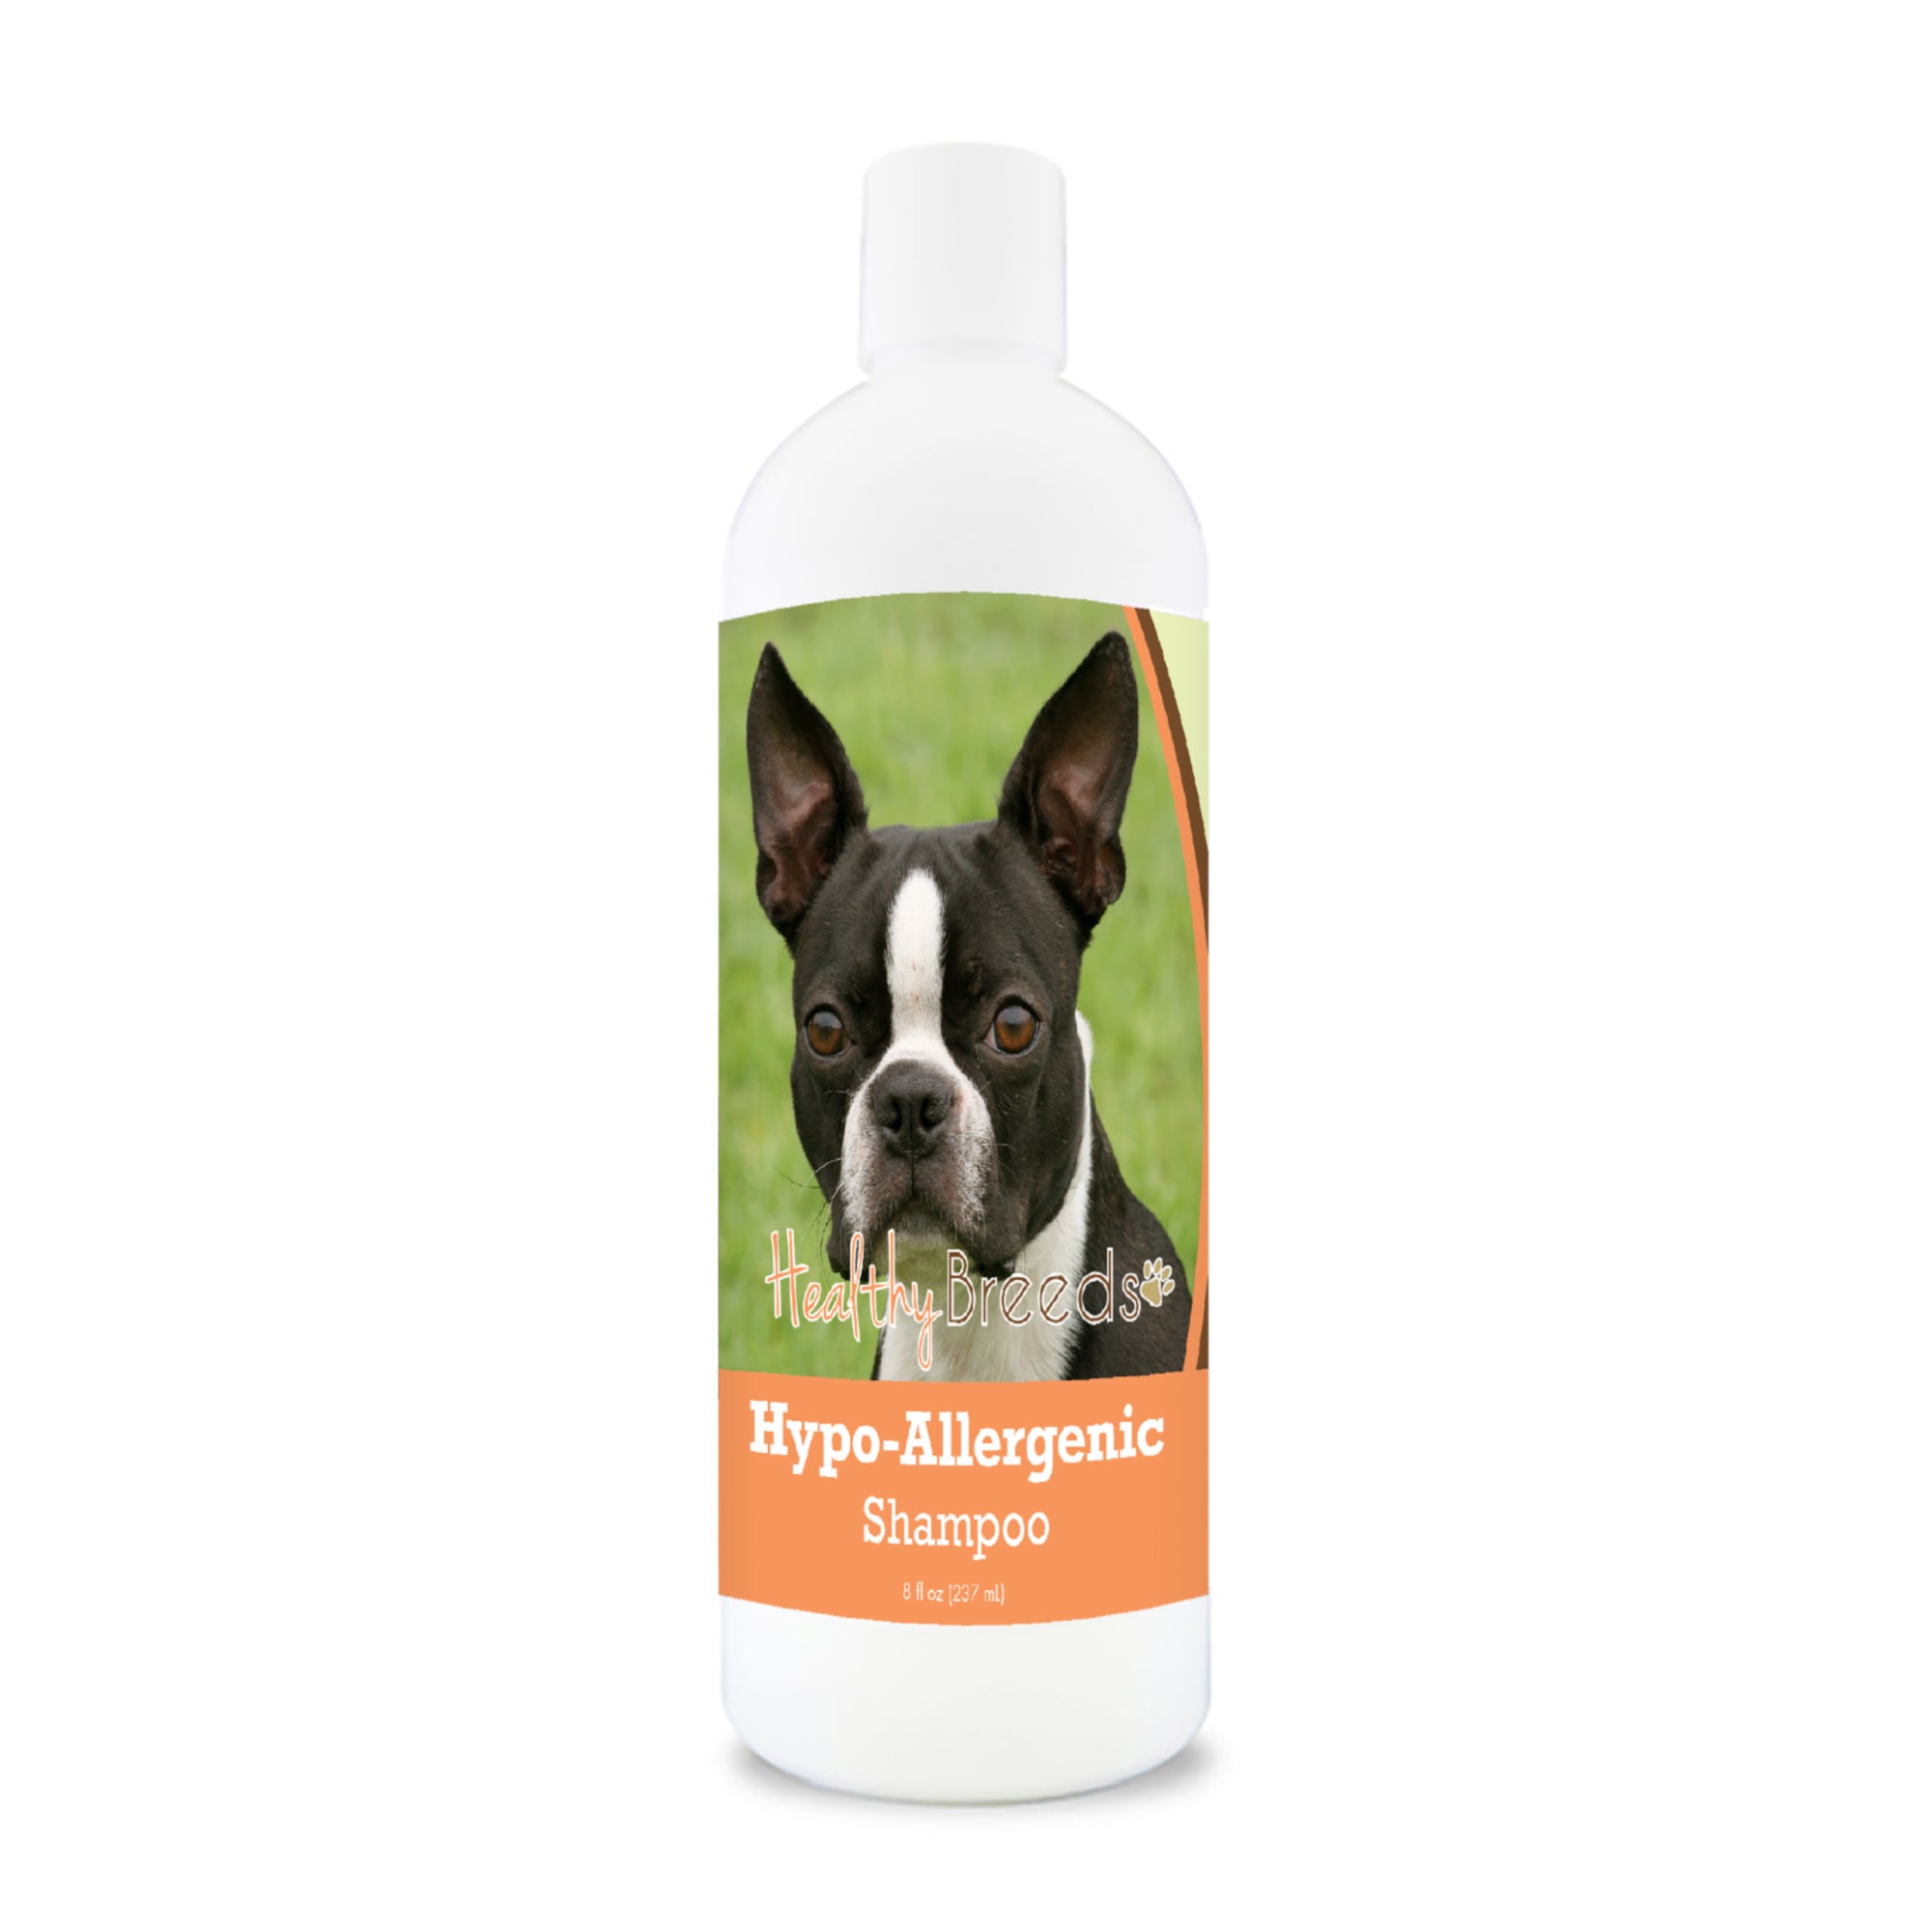 Boston Terrier Hypo-Allergenic Shampoo 8 oz